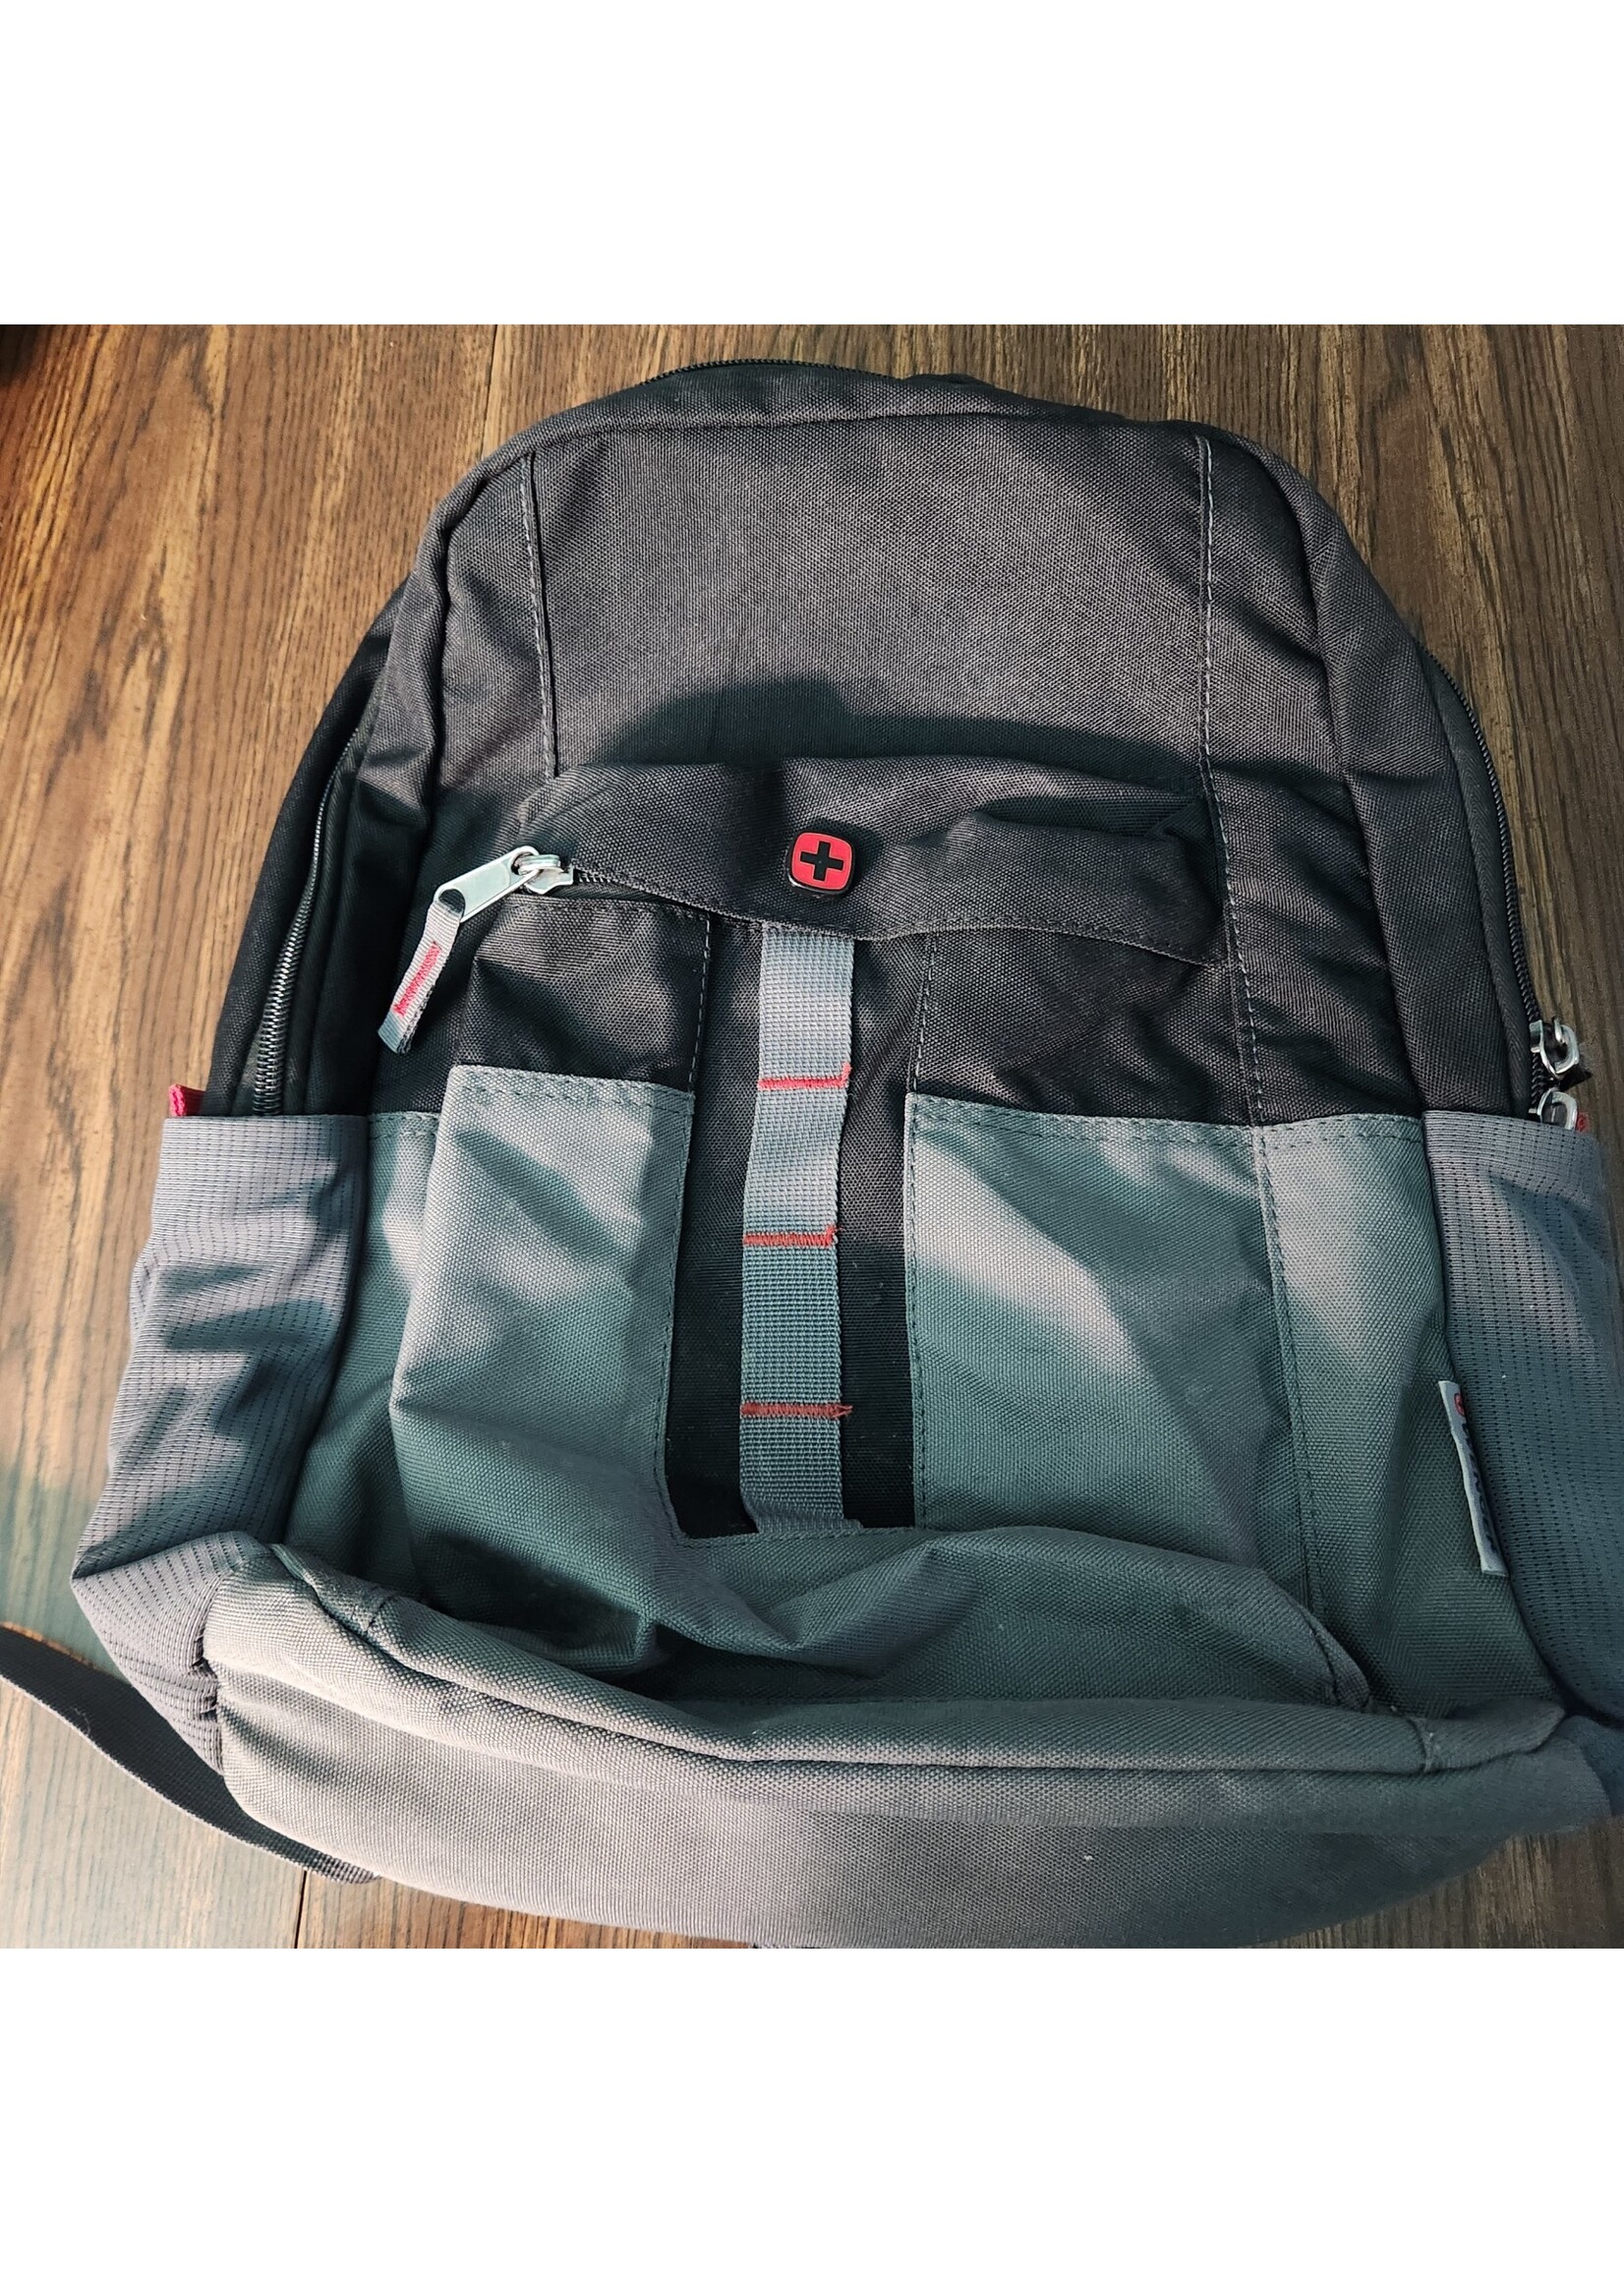 Swissgear WENGER Ero Pro 16 inch Laptop Backpack - Black/Gray